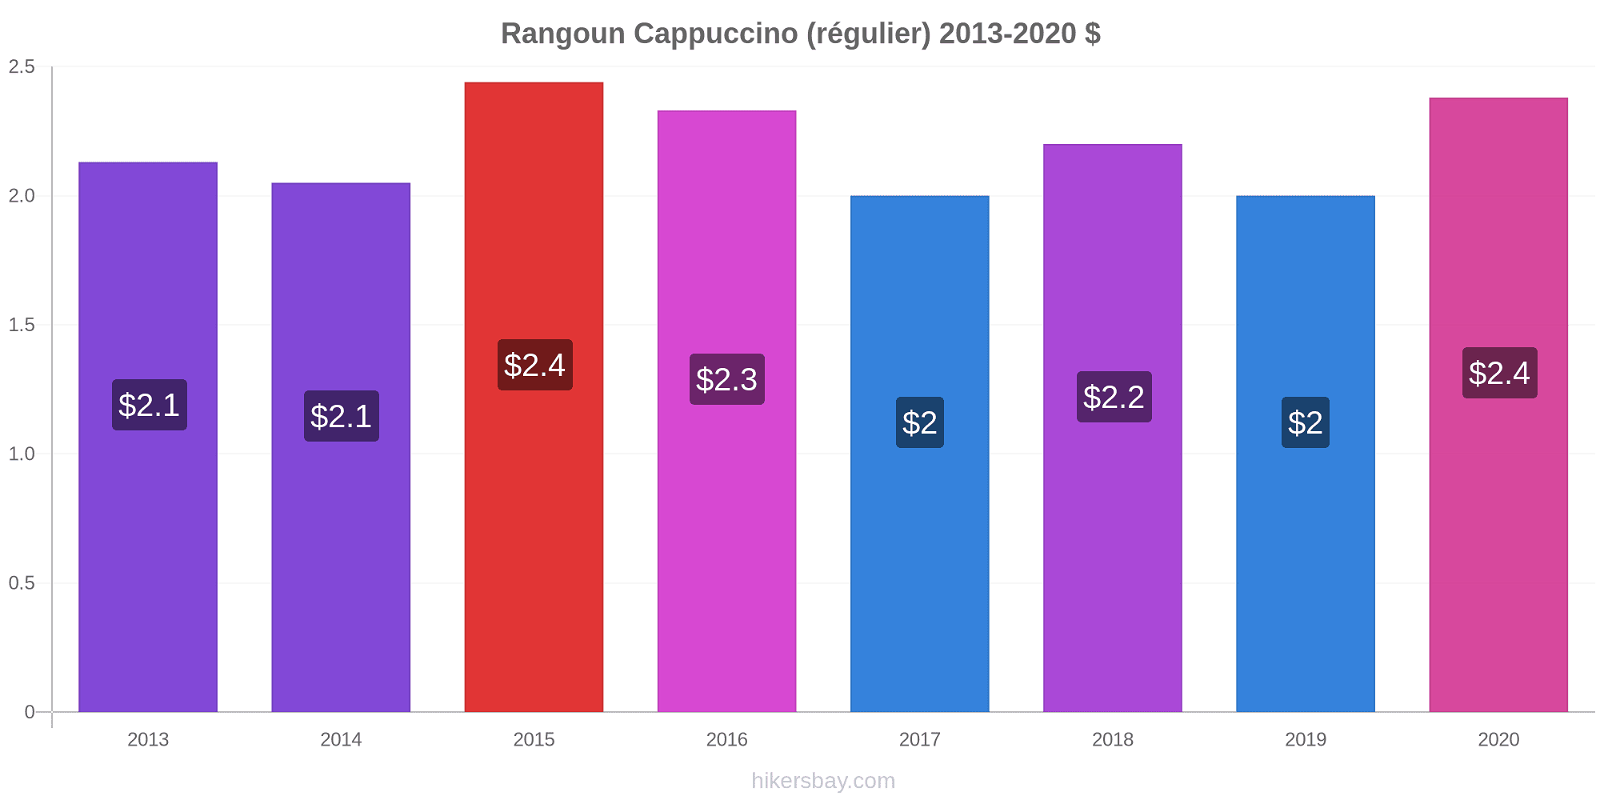 Rangoun changements de prix Cappuccino (régulier) hikersbay.com